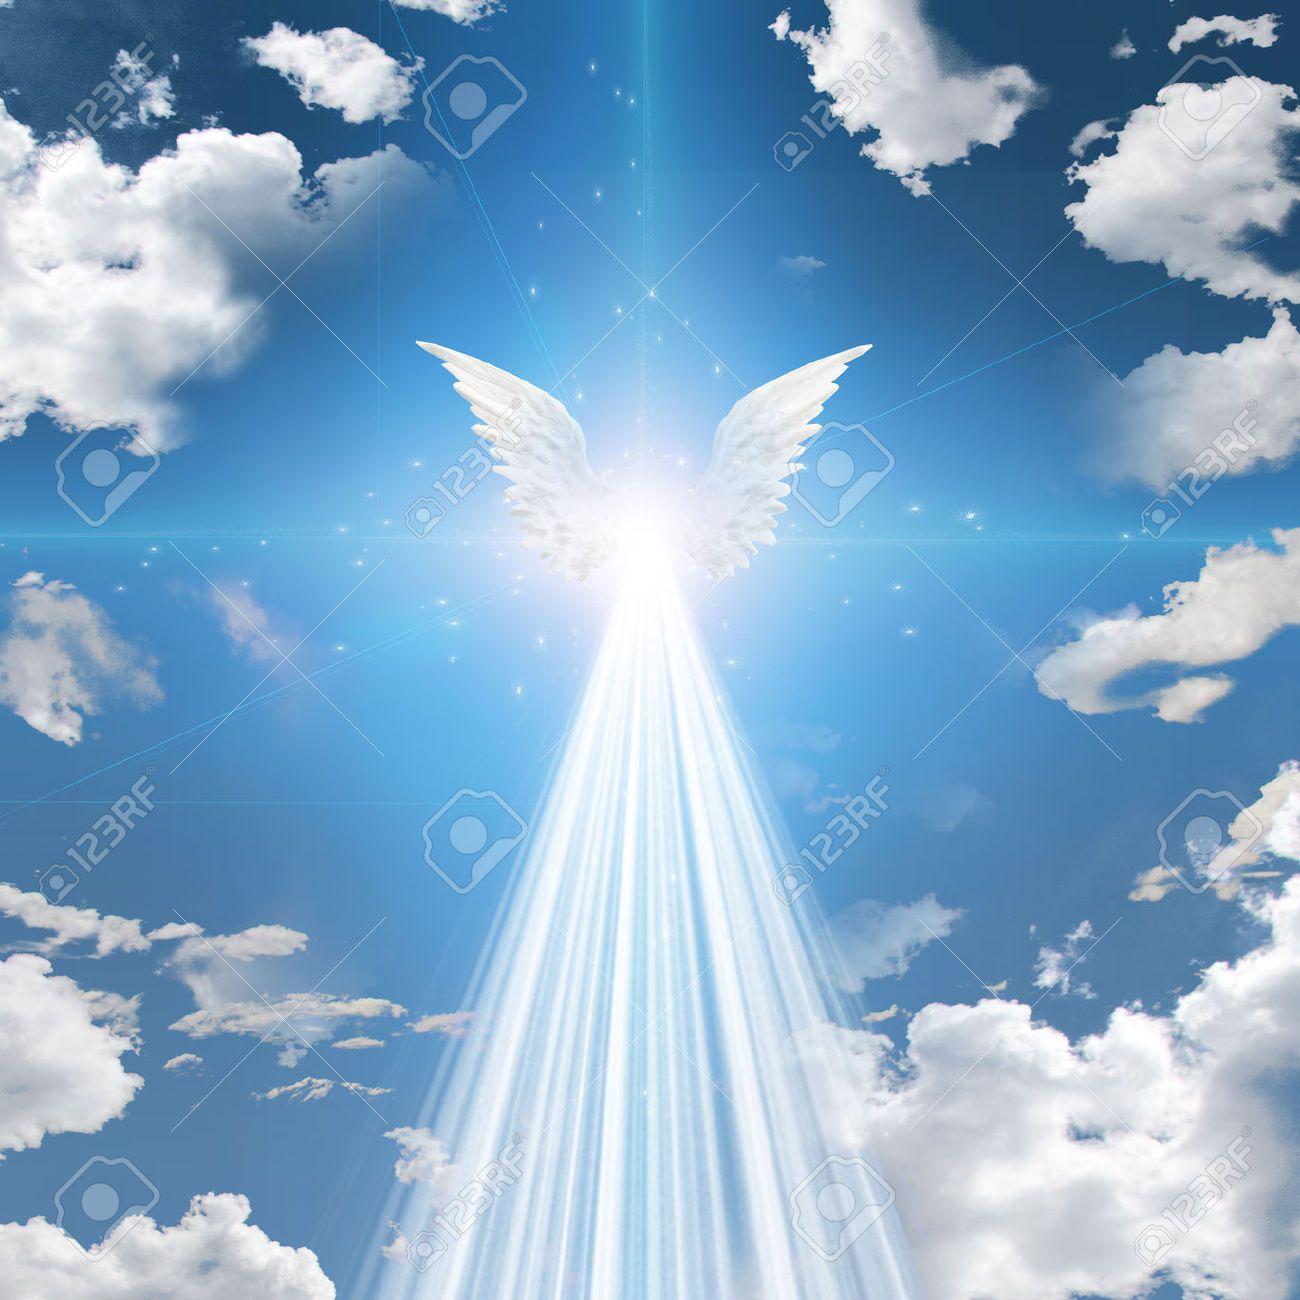 Download Spiritual Archangel Michael